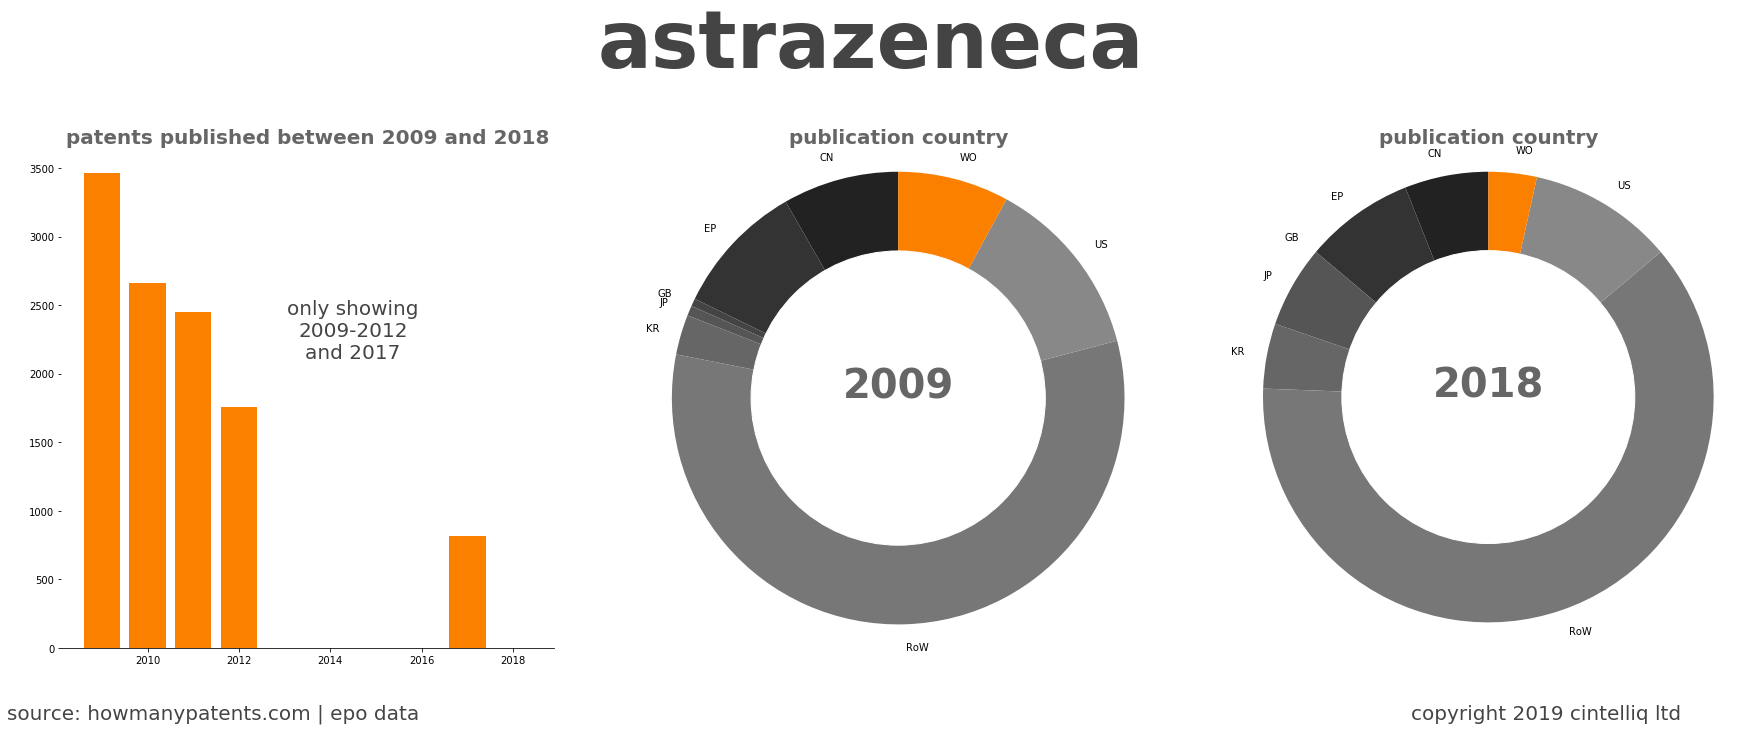 summary of patents for Astrazeneca